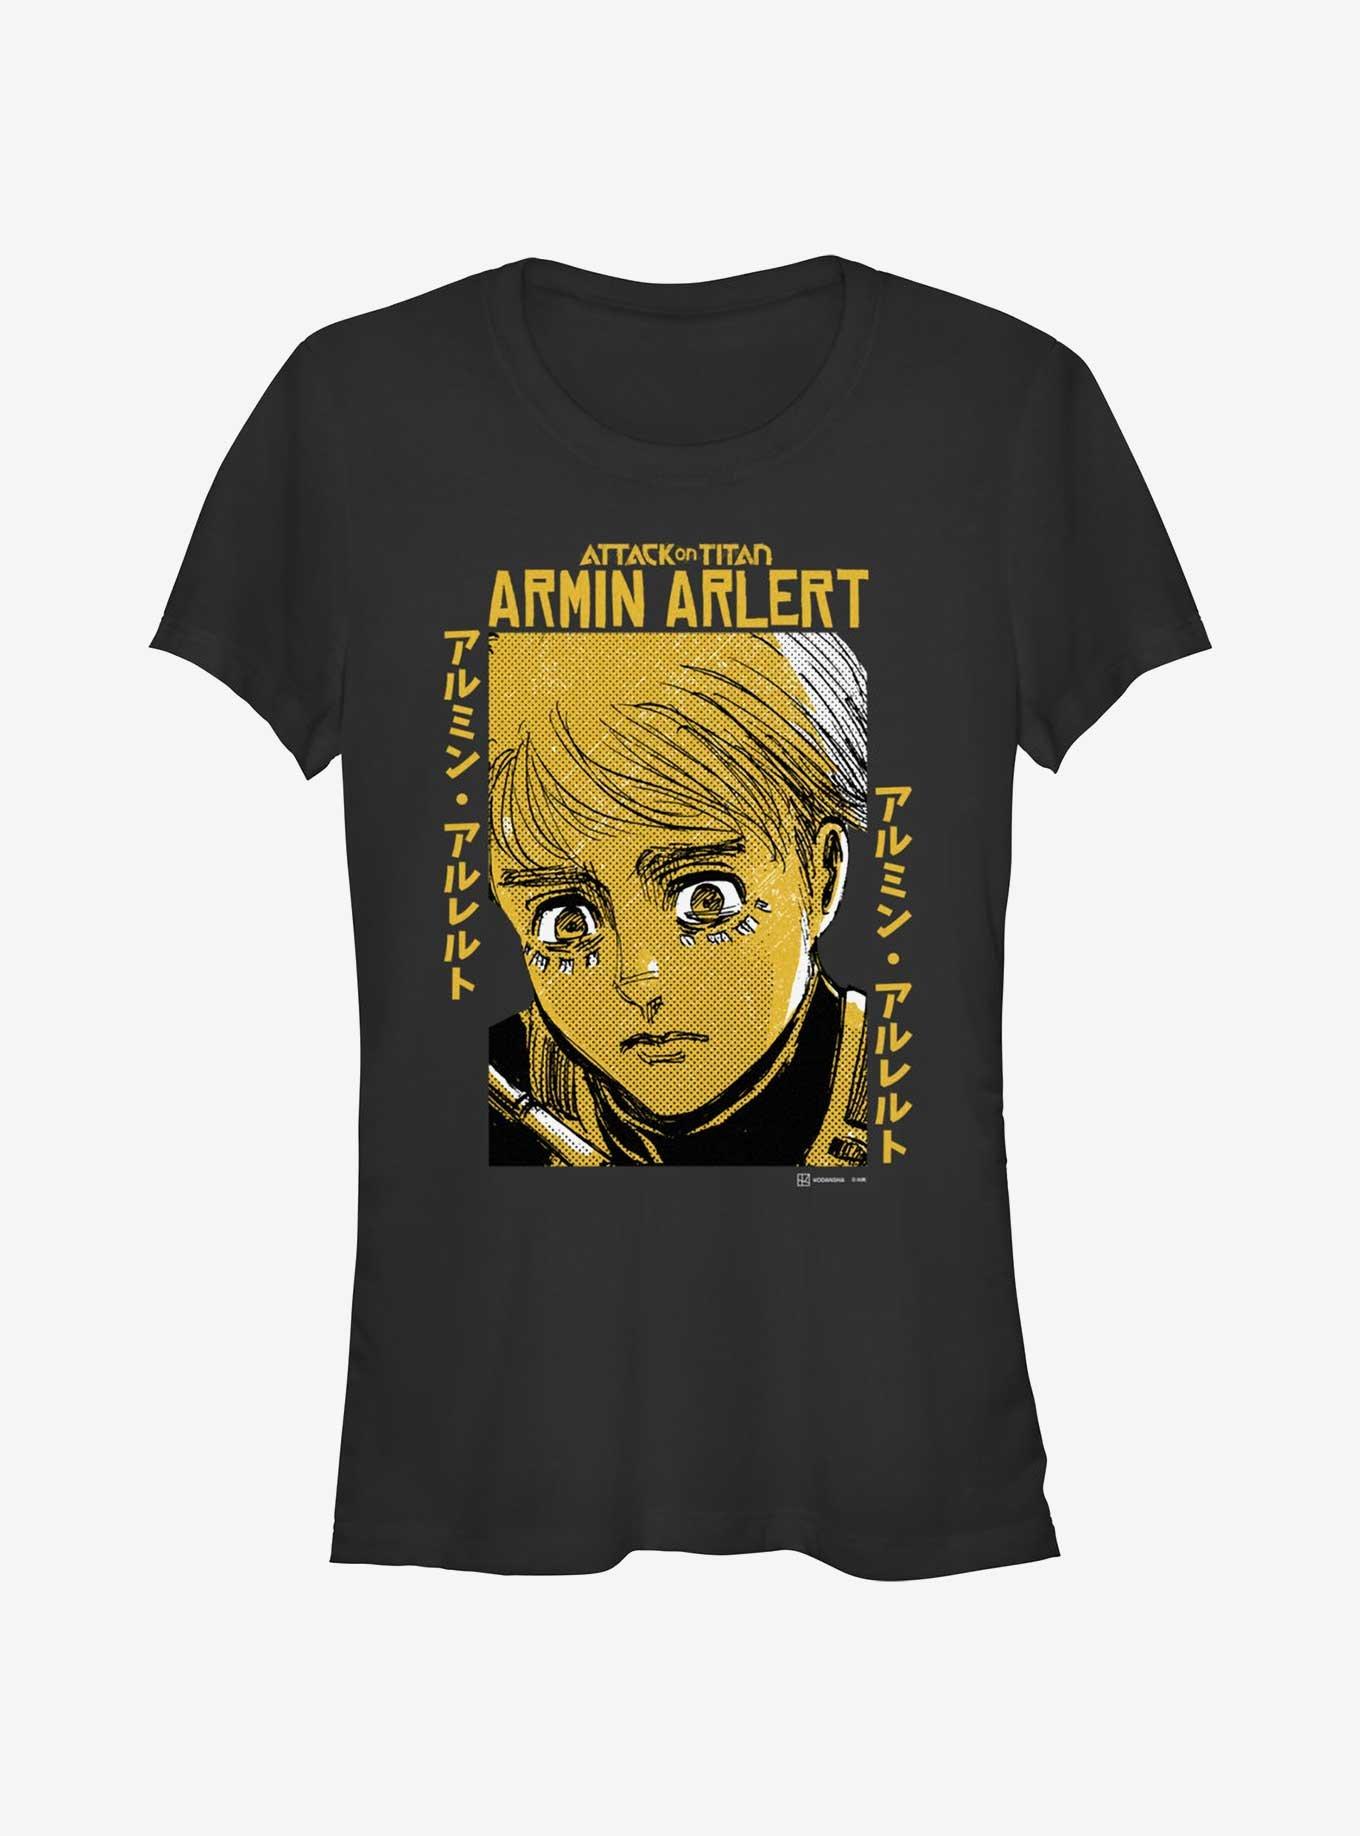 Attack on Titan Armin Arlert Portrait Girls T-Shirt Hot Topic Web Exclusive